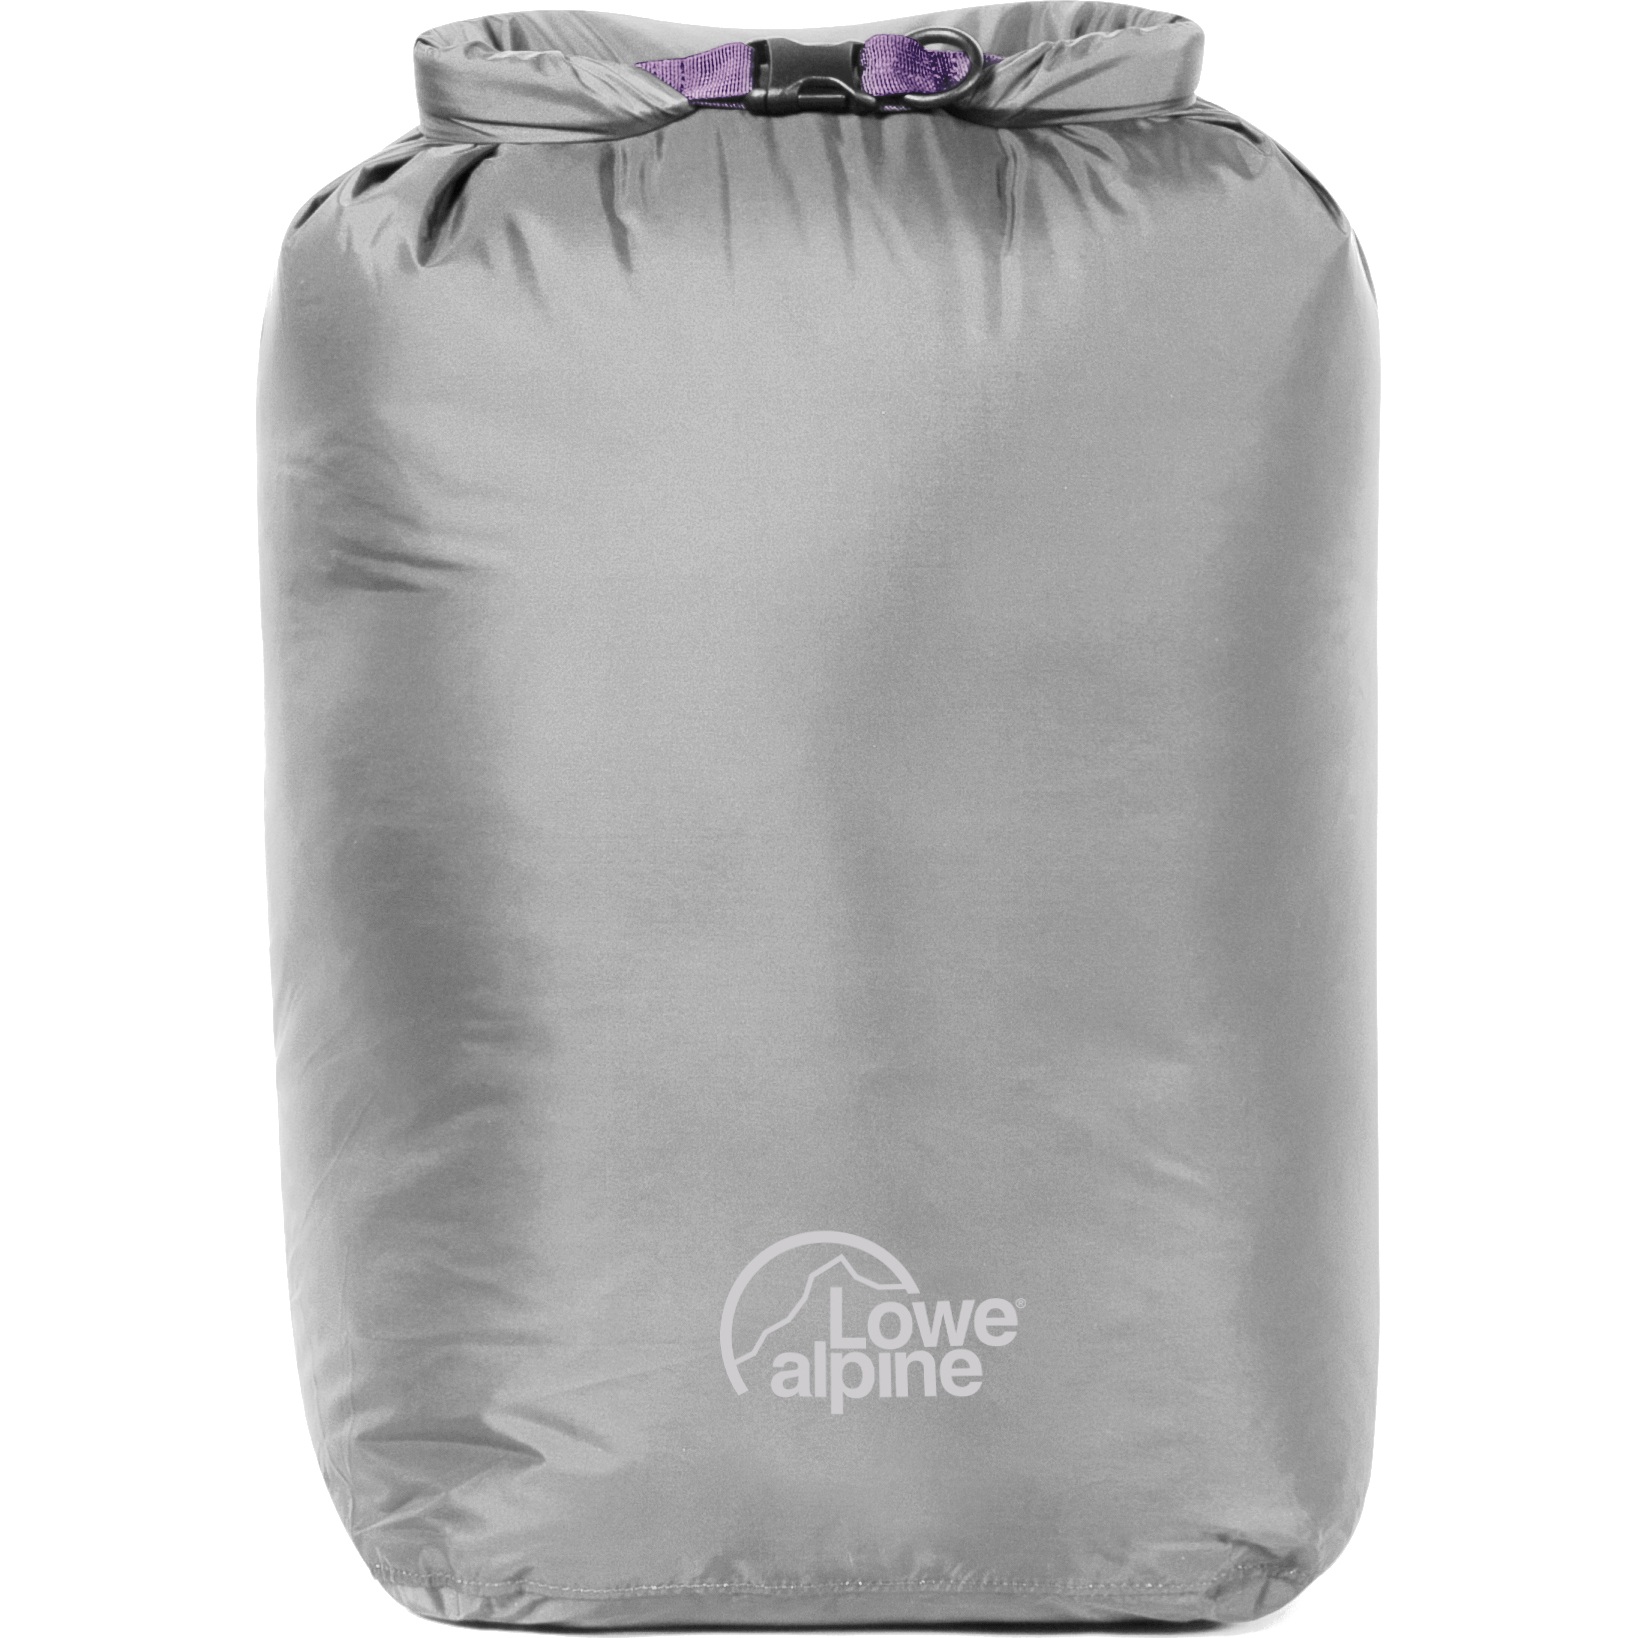 Productfoto van Lowe Alpine Ultralite - Dry Bag - 20L